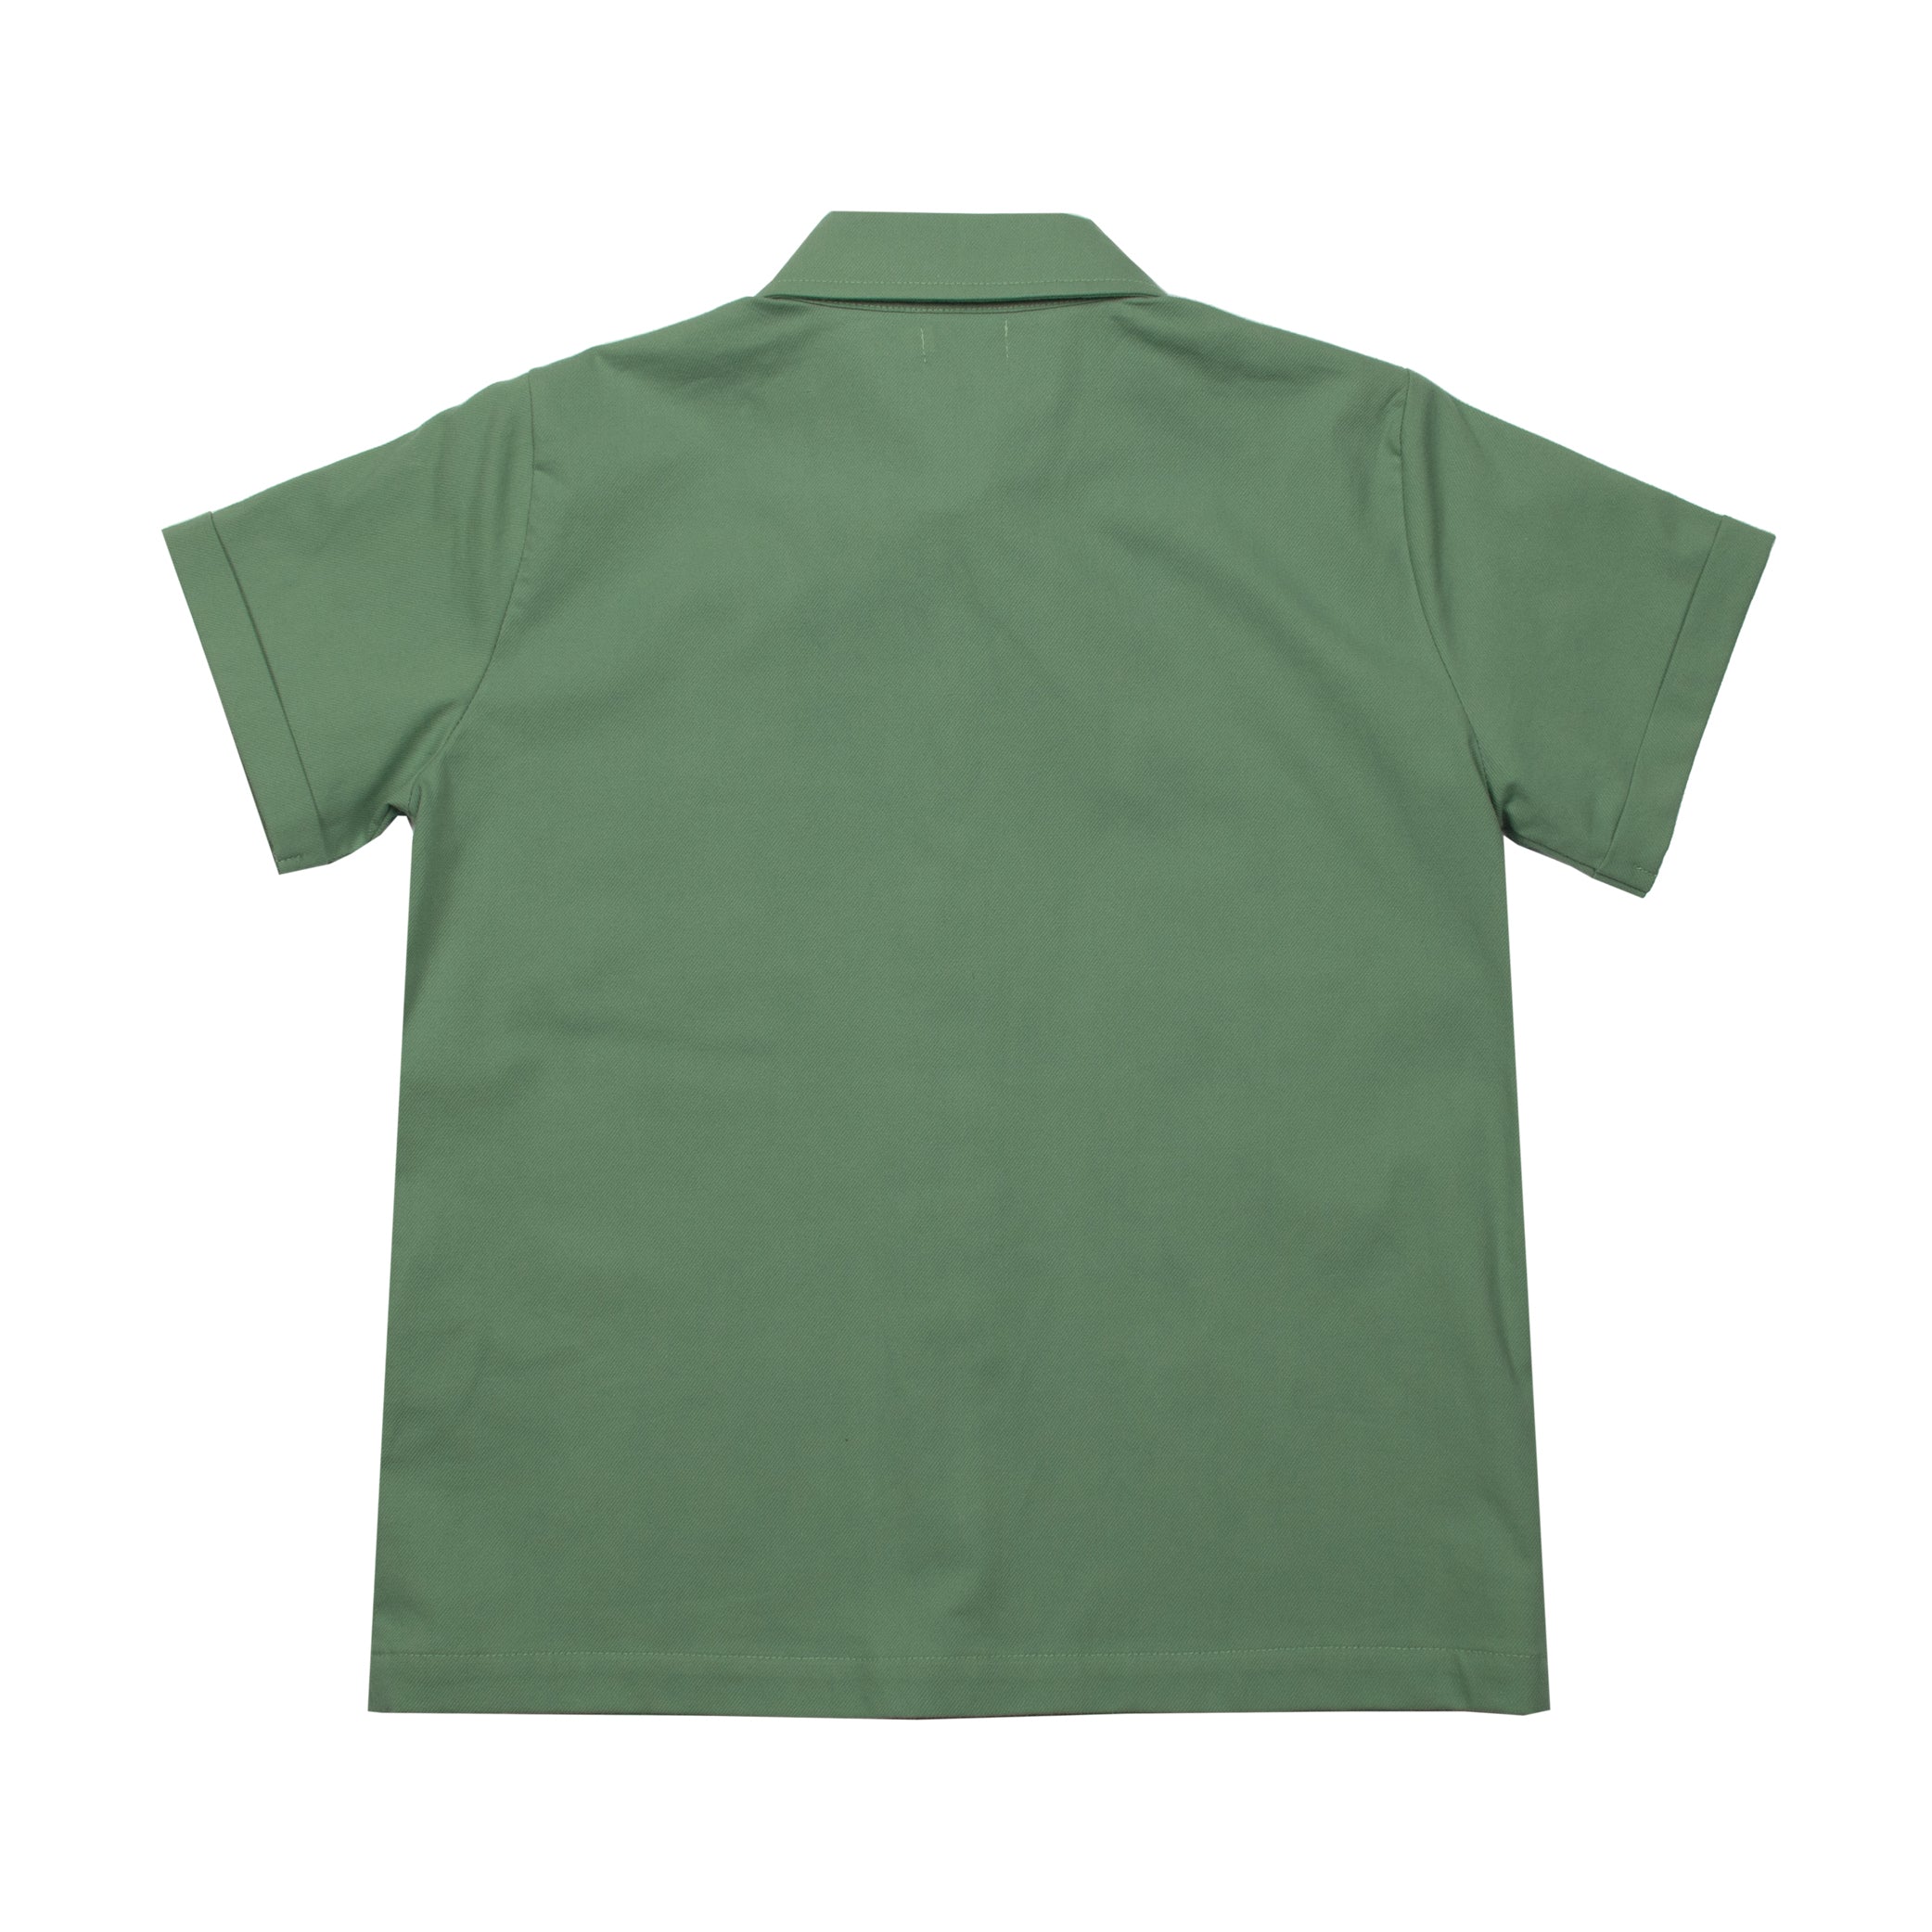 Diagonal Canvas Pockets Shirt - Suuky NC